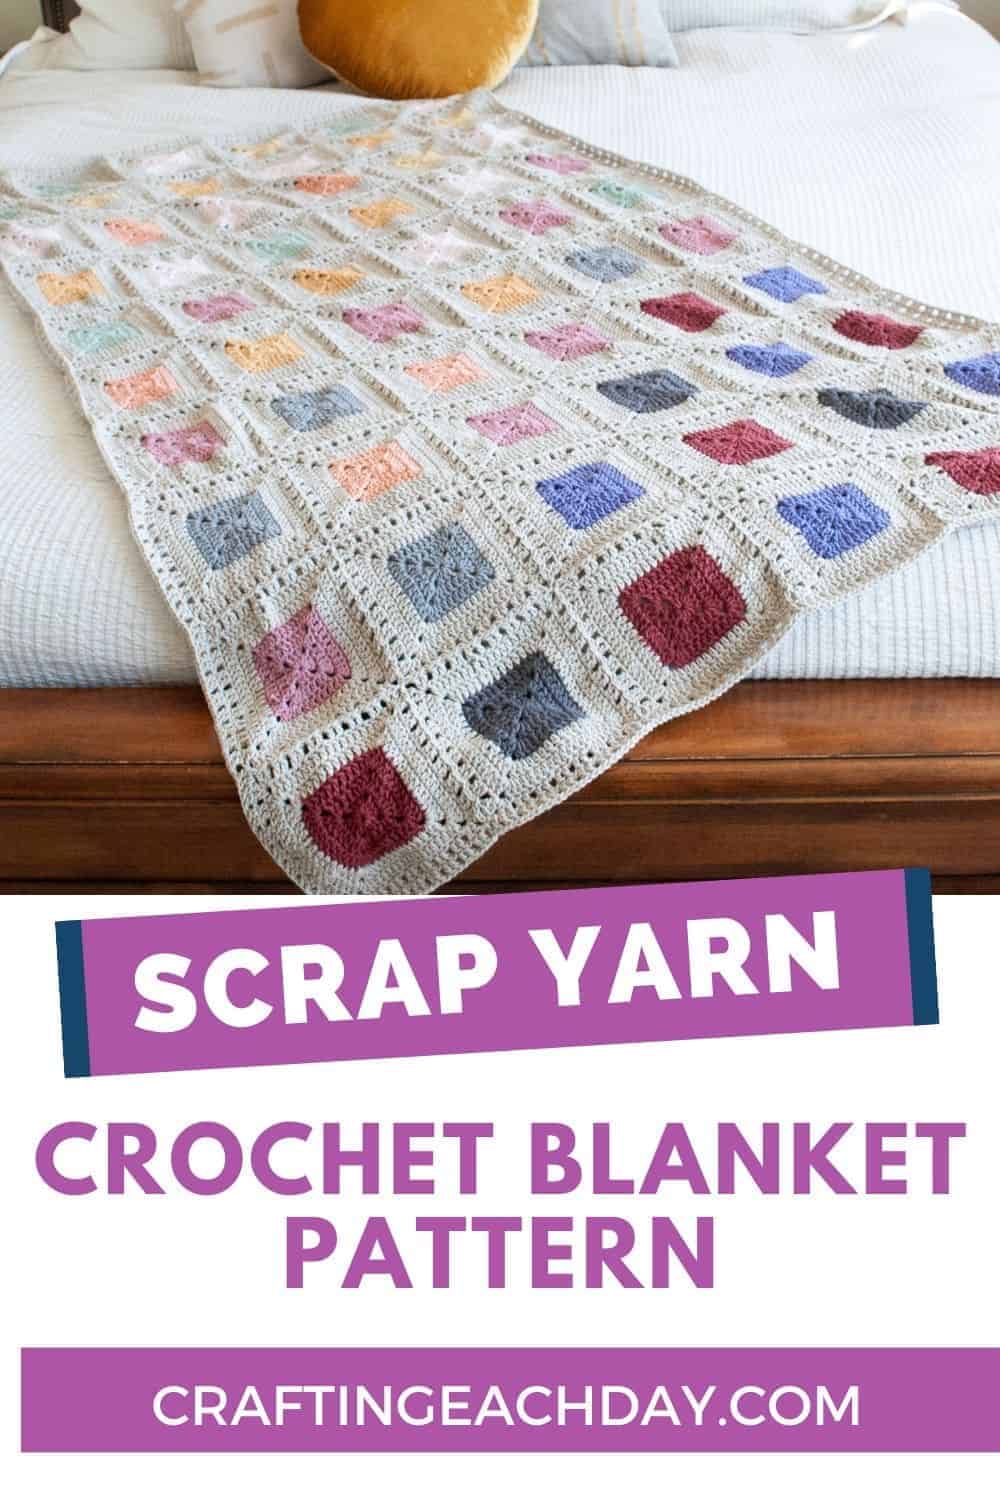 Scrap Yarn Crochet Blanket Pattern - Crafting Each Day